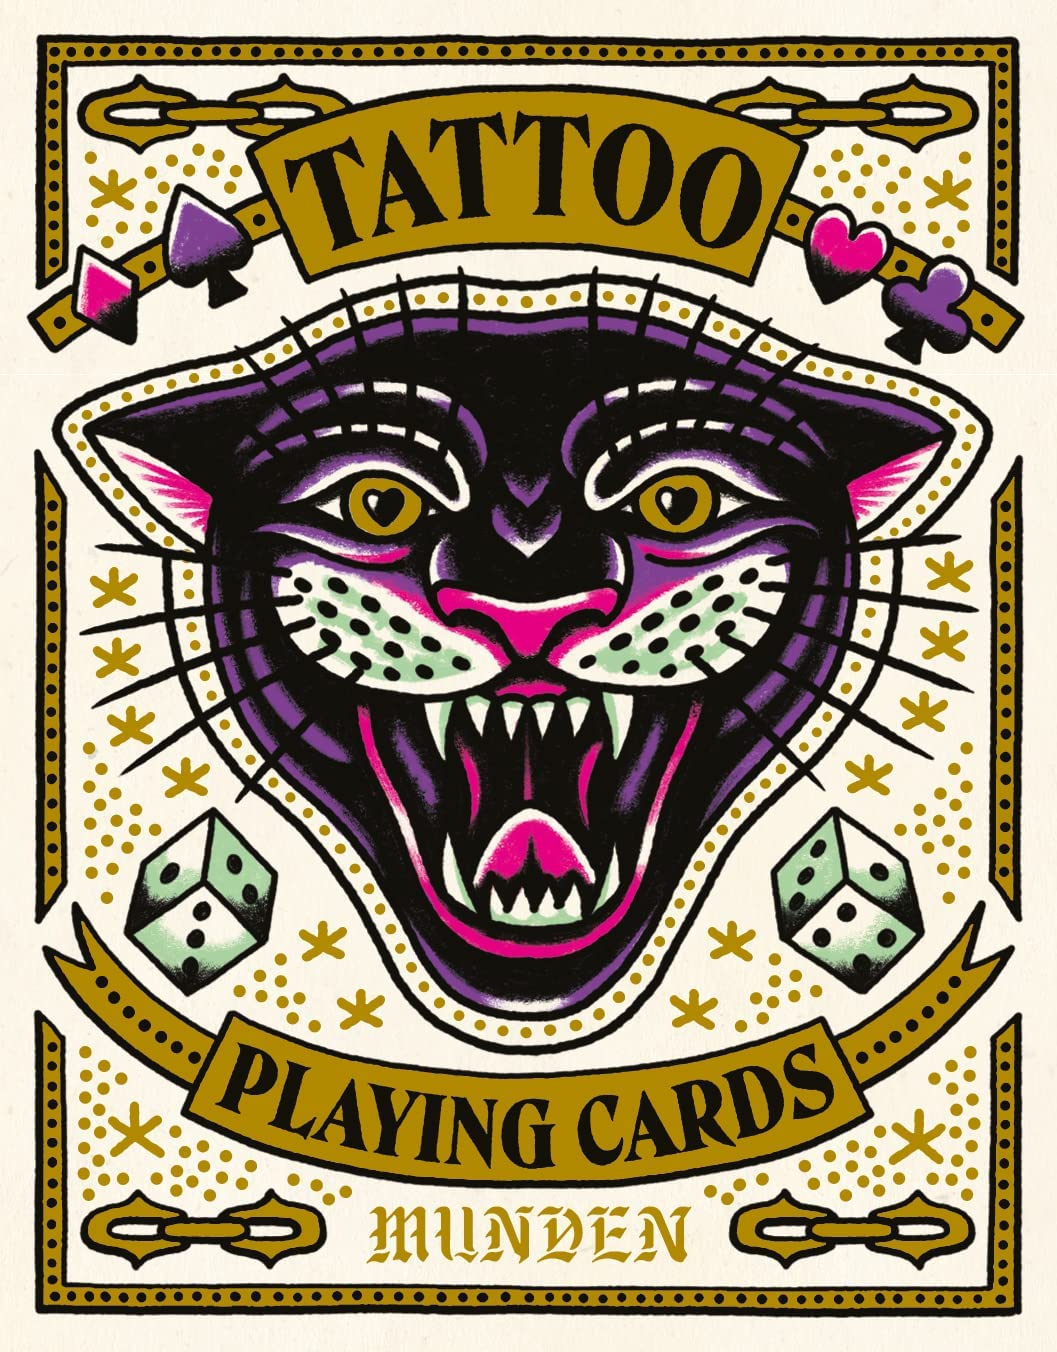 Tattoo Tarot - Ink &amp; Intuition